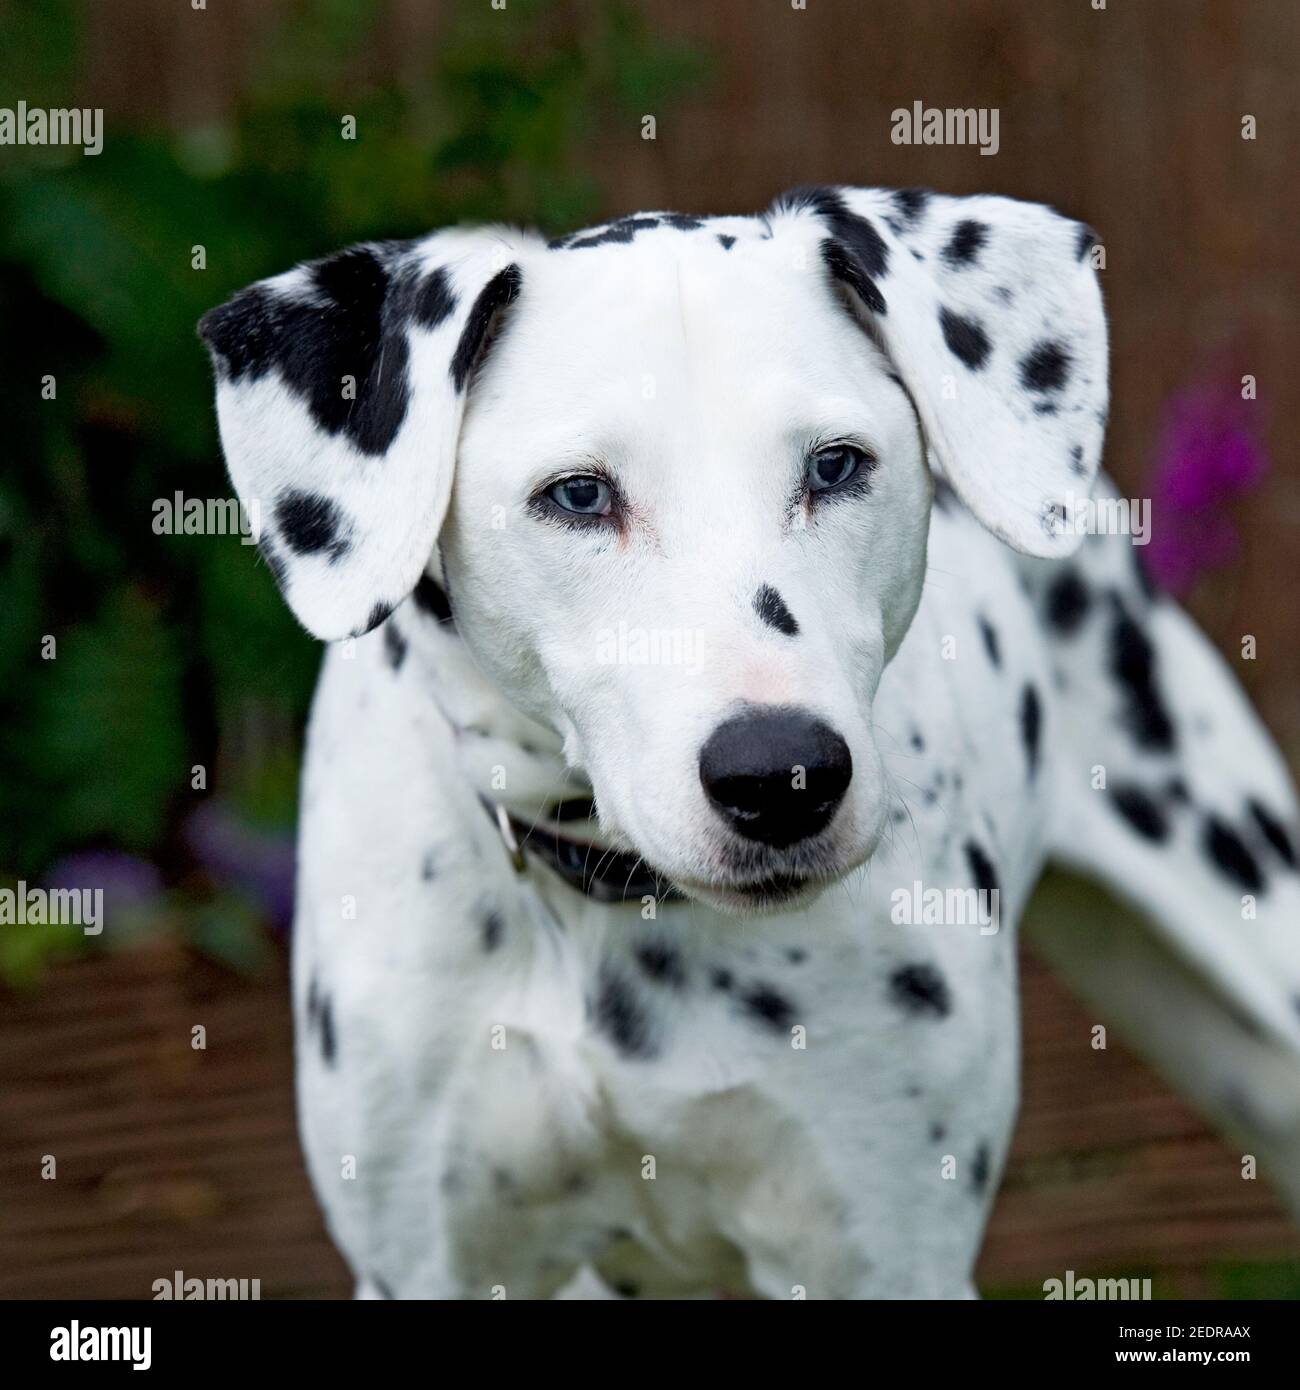 dalmatian dog Stock Photo - Alamy